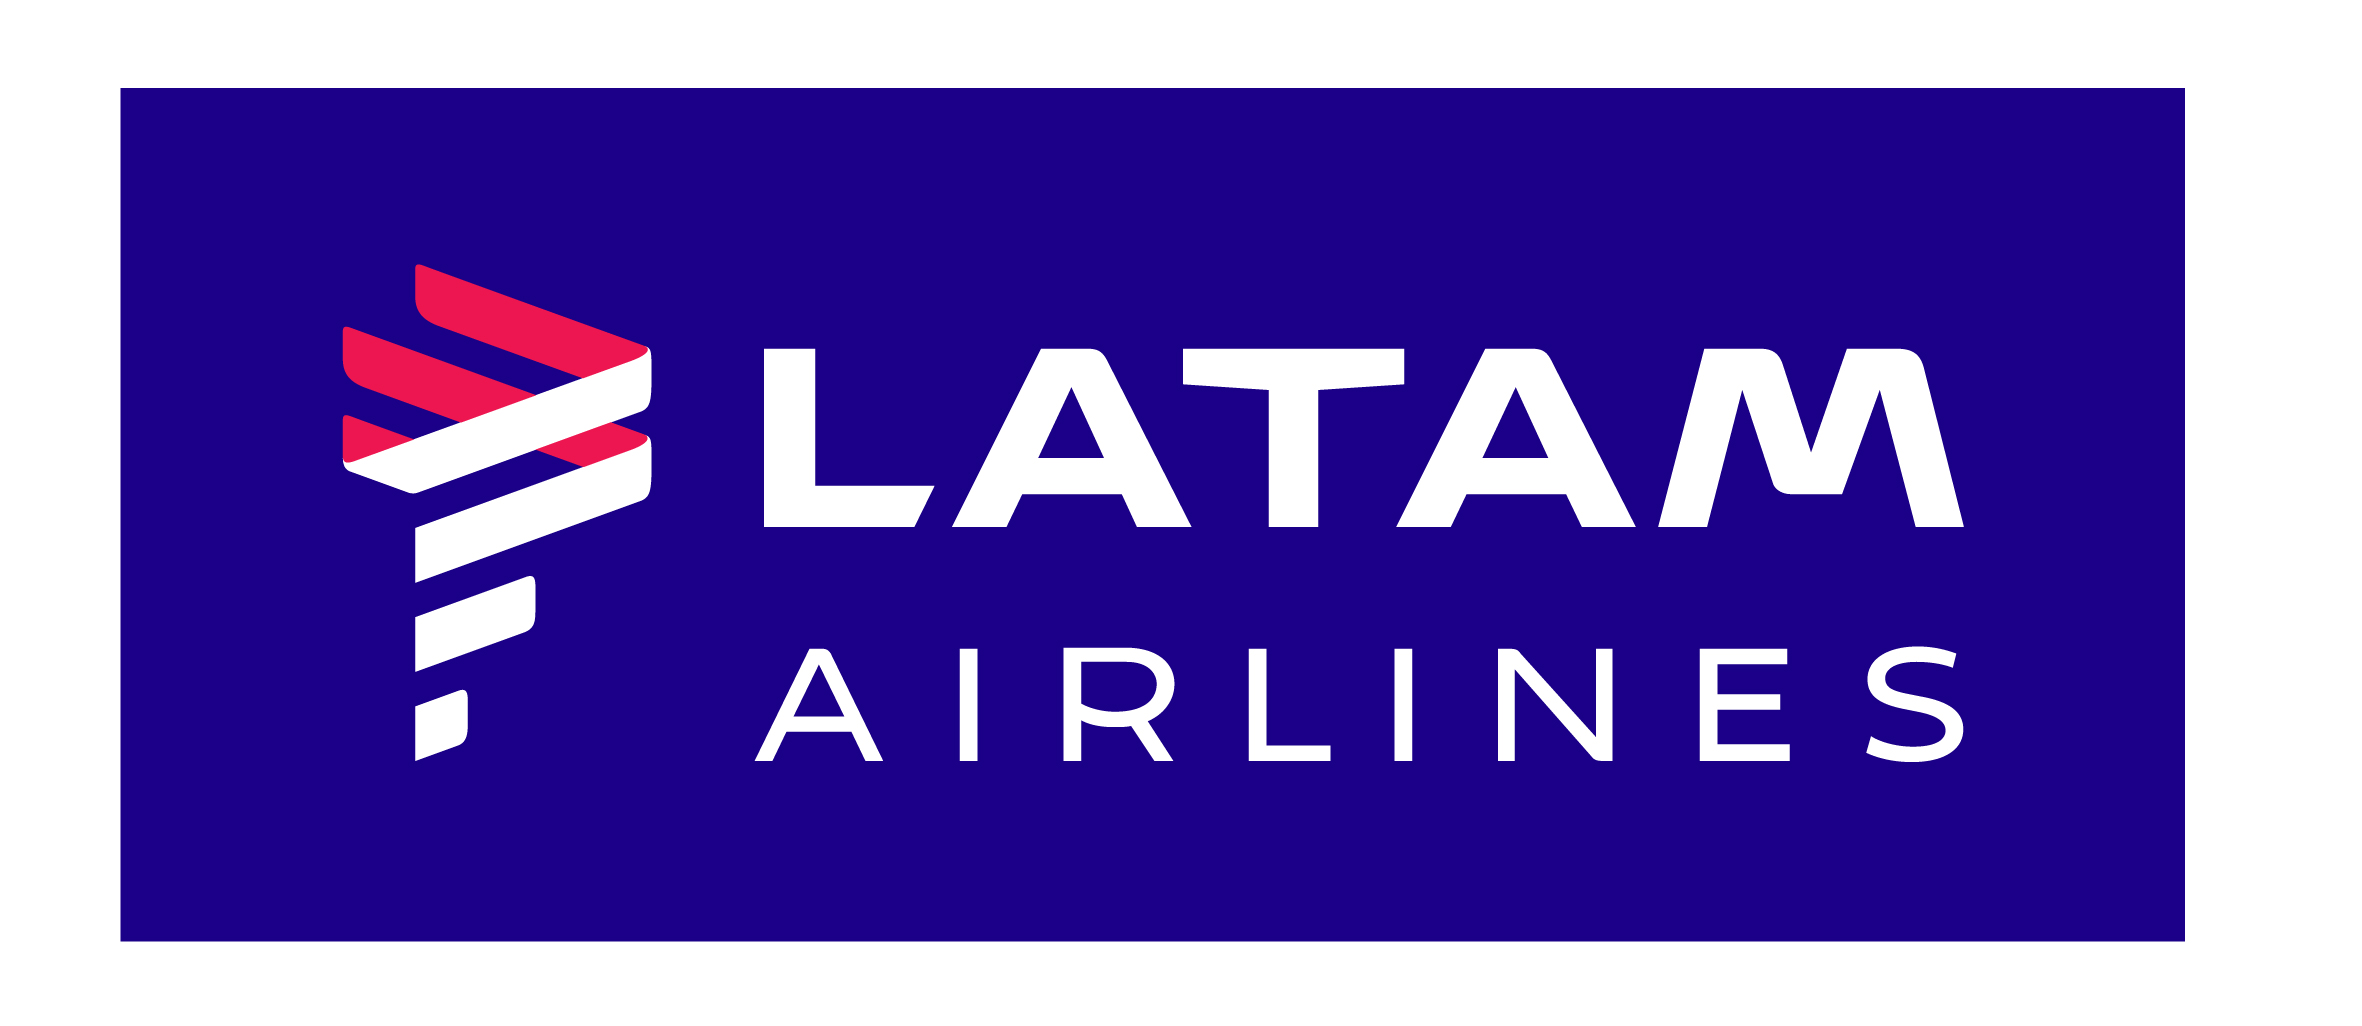 LATAM Airlines Negative JPEG (2) (1)